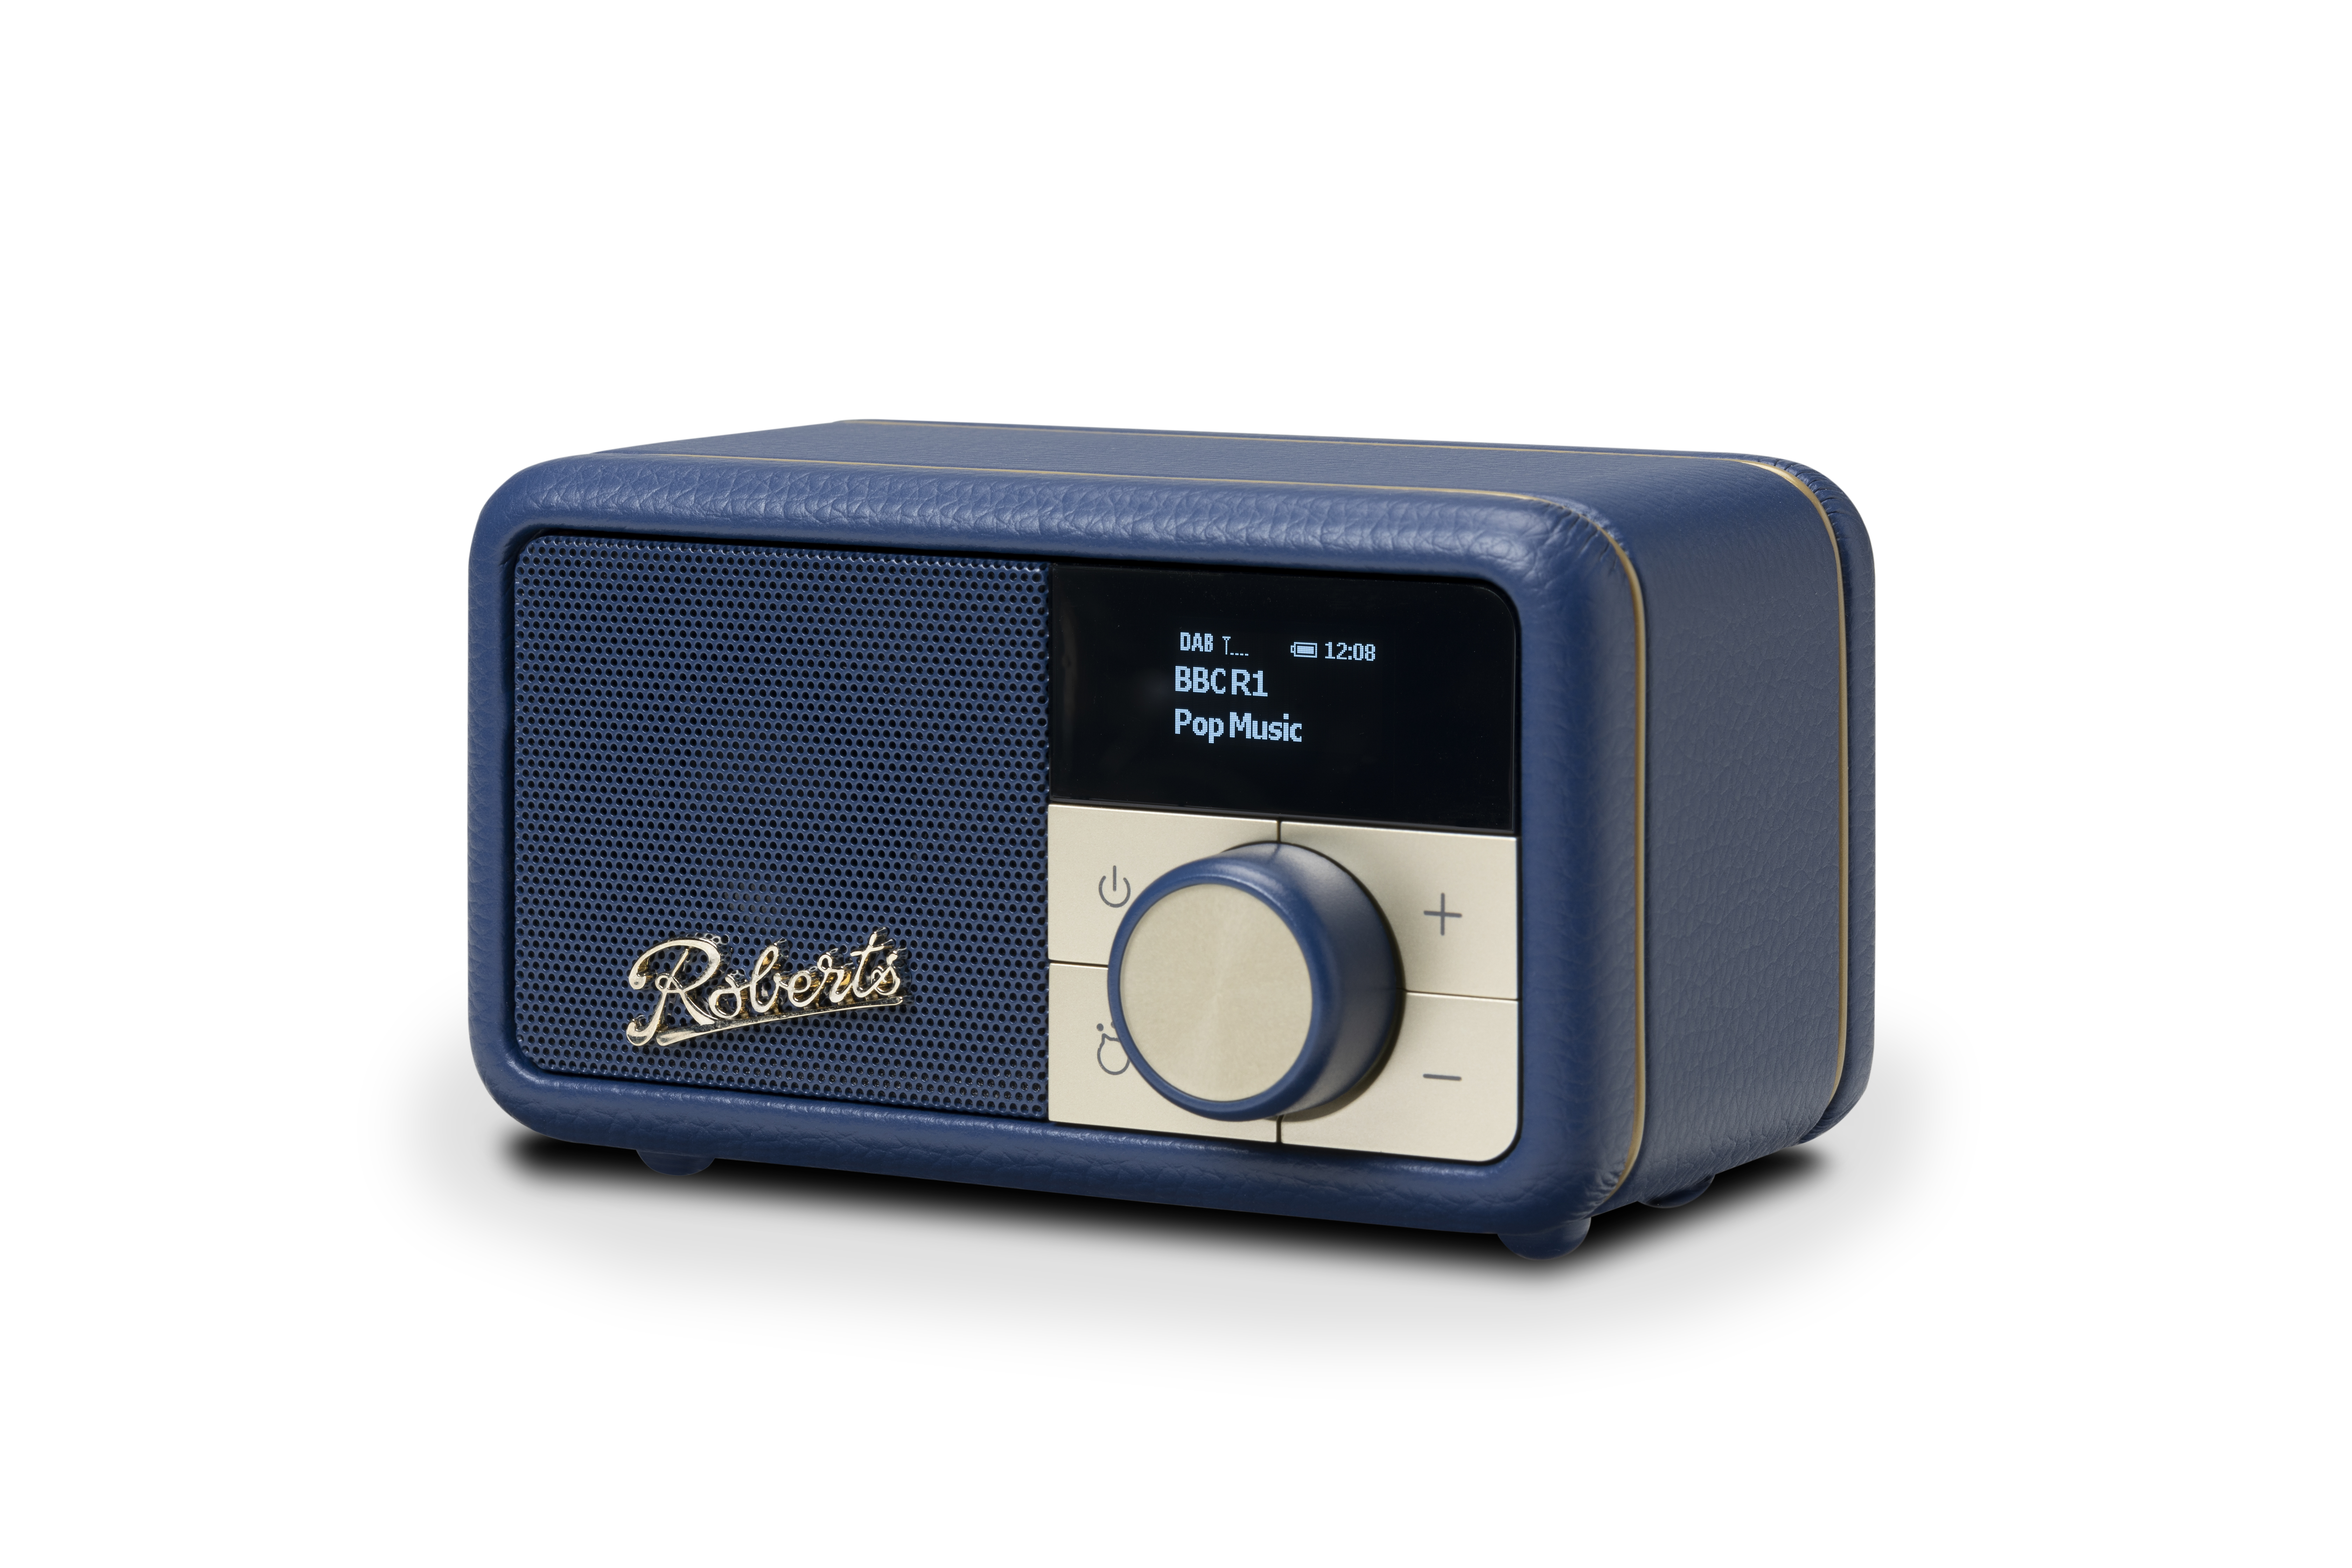 ROBERTS RADIO Revival Petite | midnight mit und DAB+ Digitalradio, tragbares Akku blue FM Blau / DAB+, integriertem | Radio Bluetooth